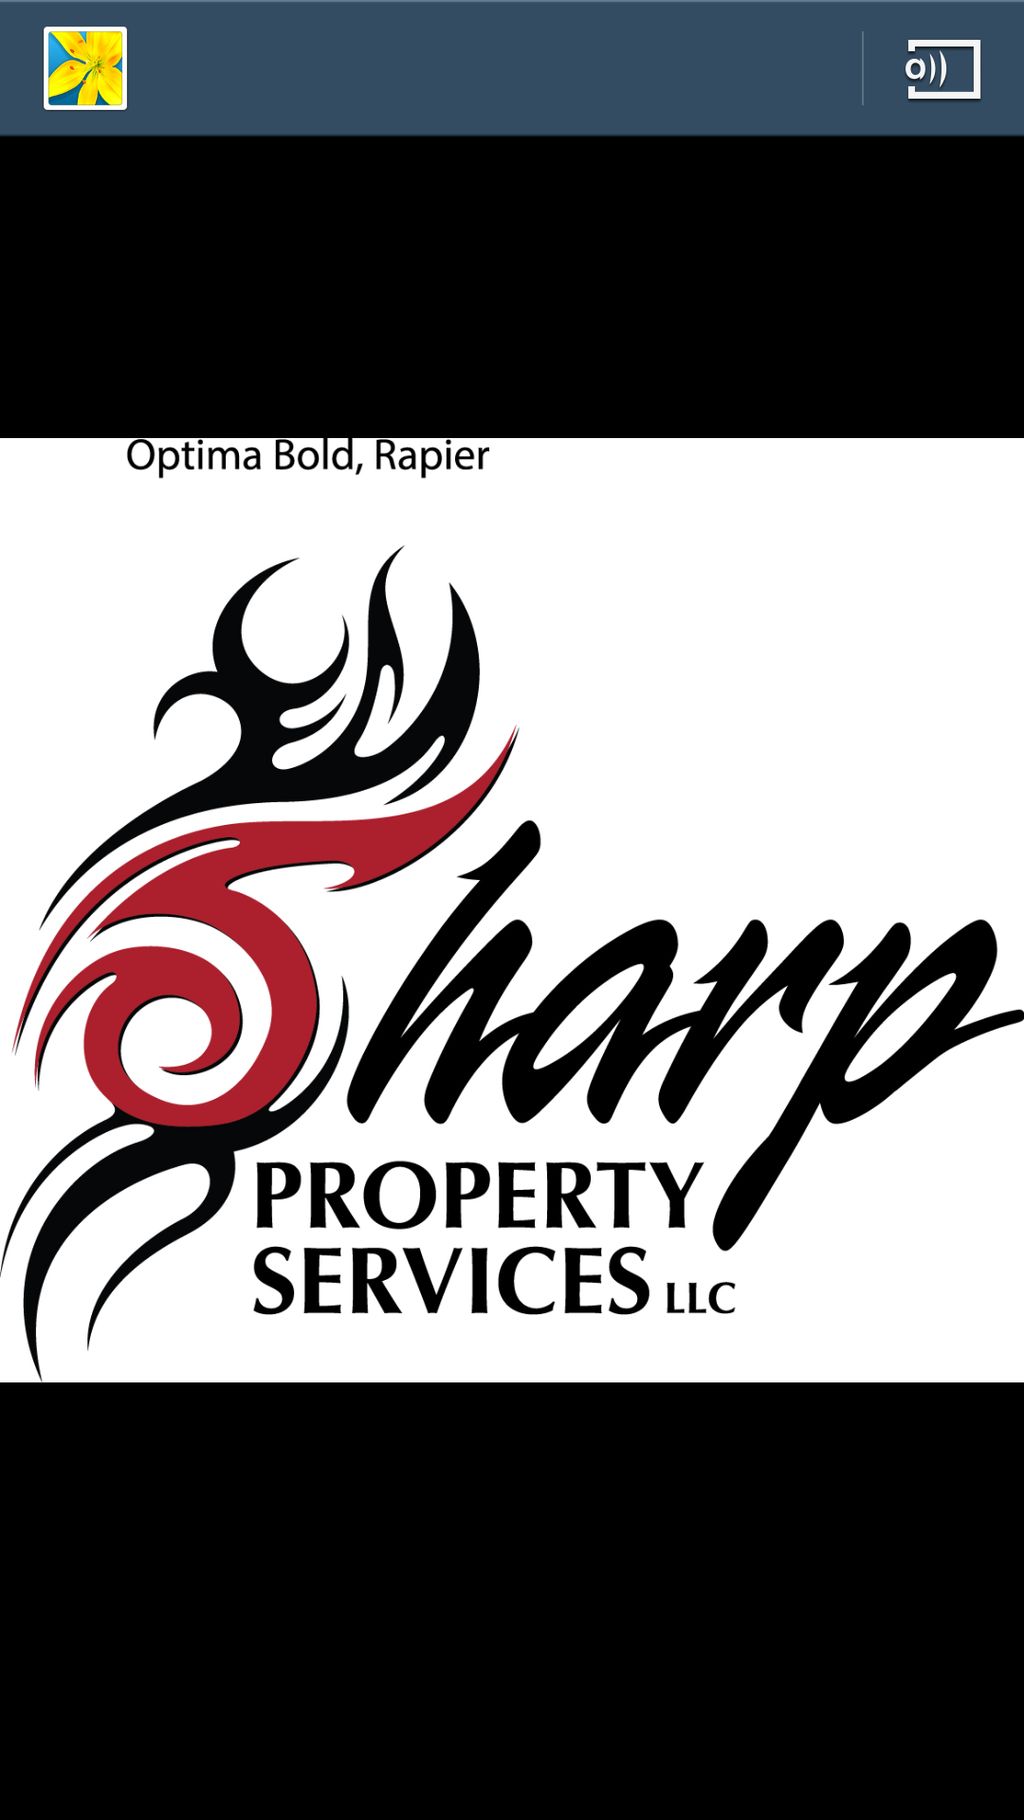 Sharp Property Services LLC